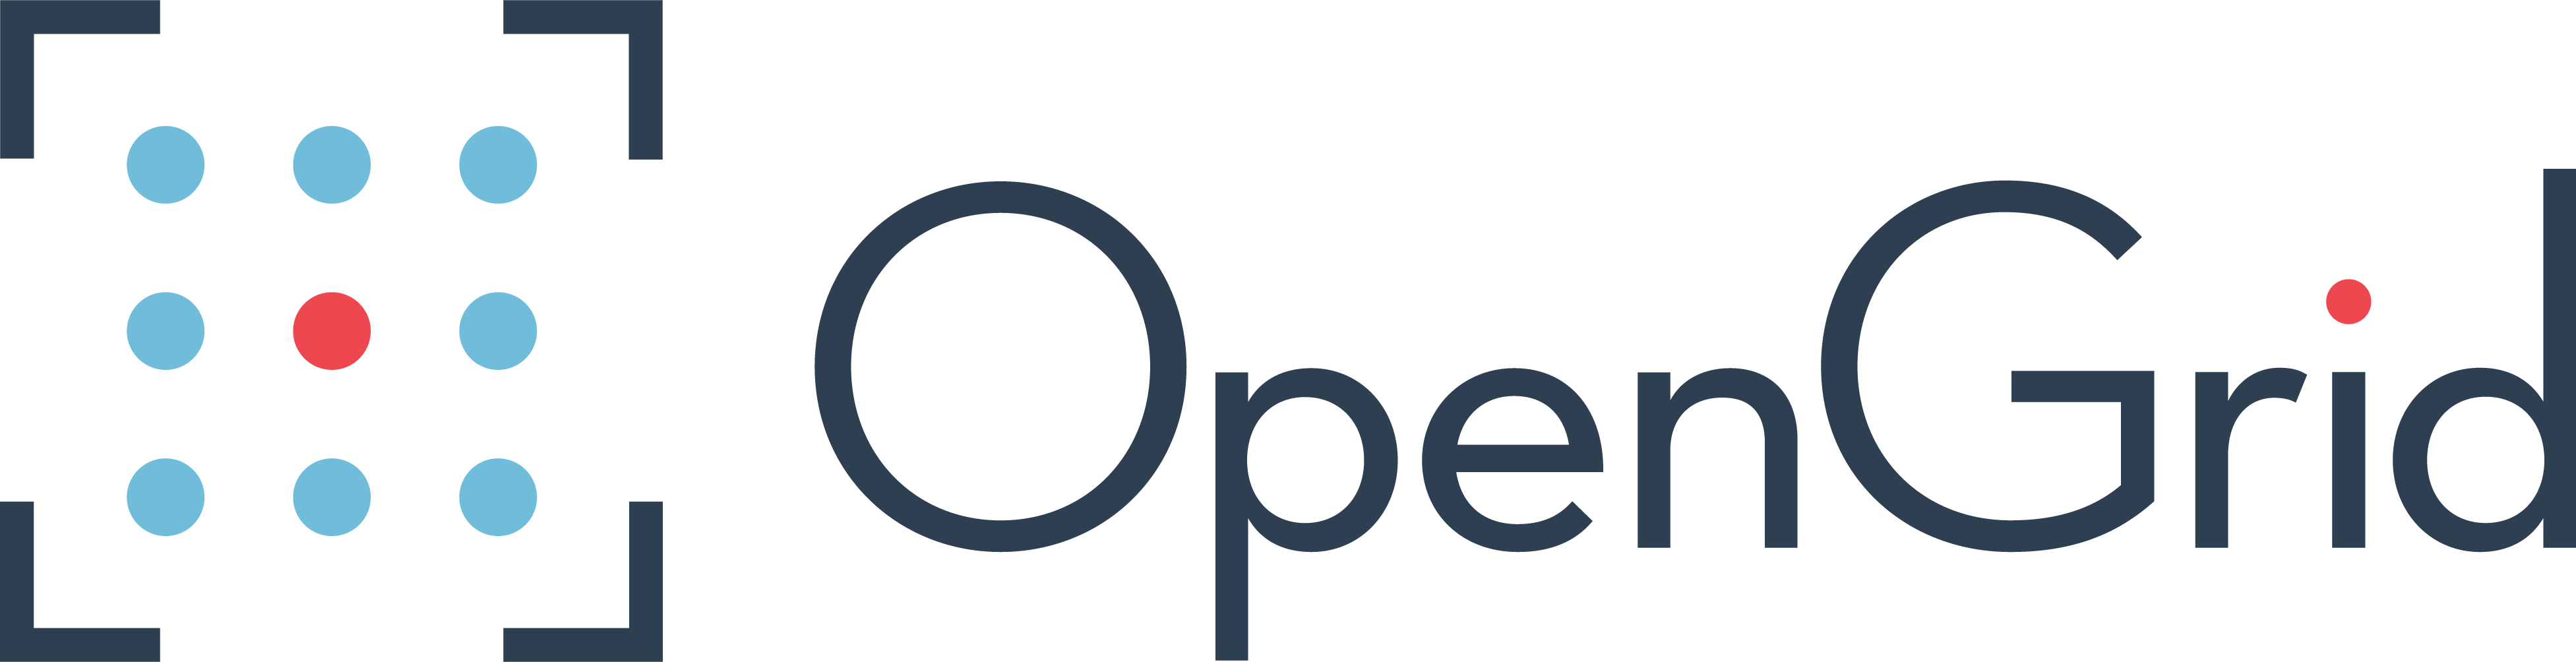 OpenGrid logo